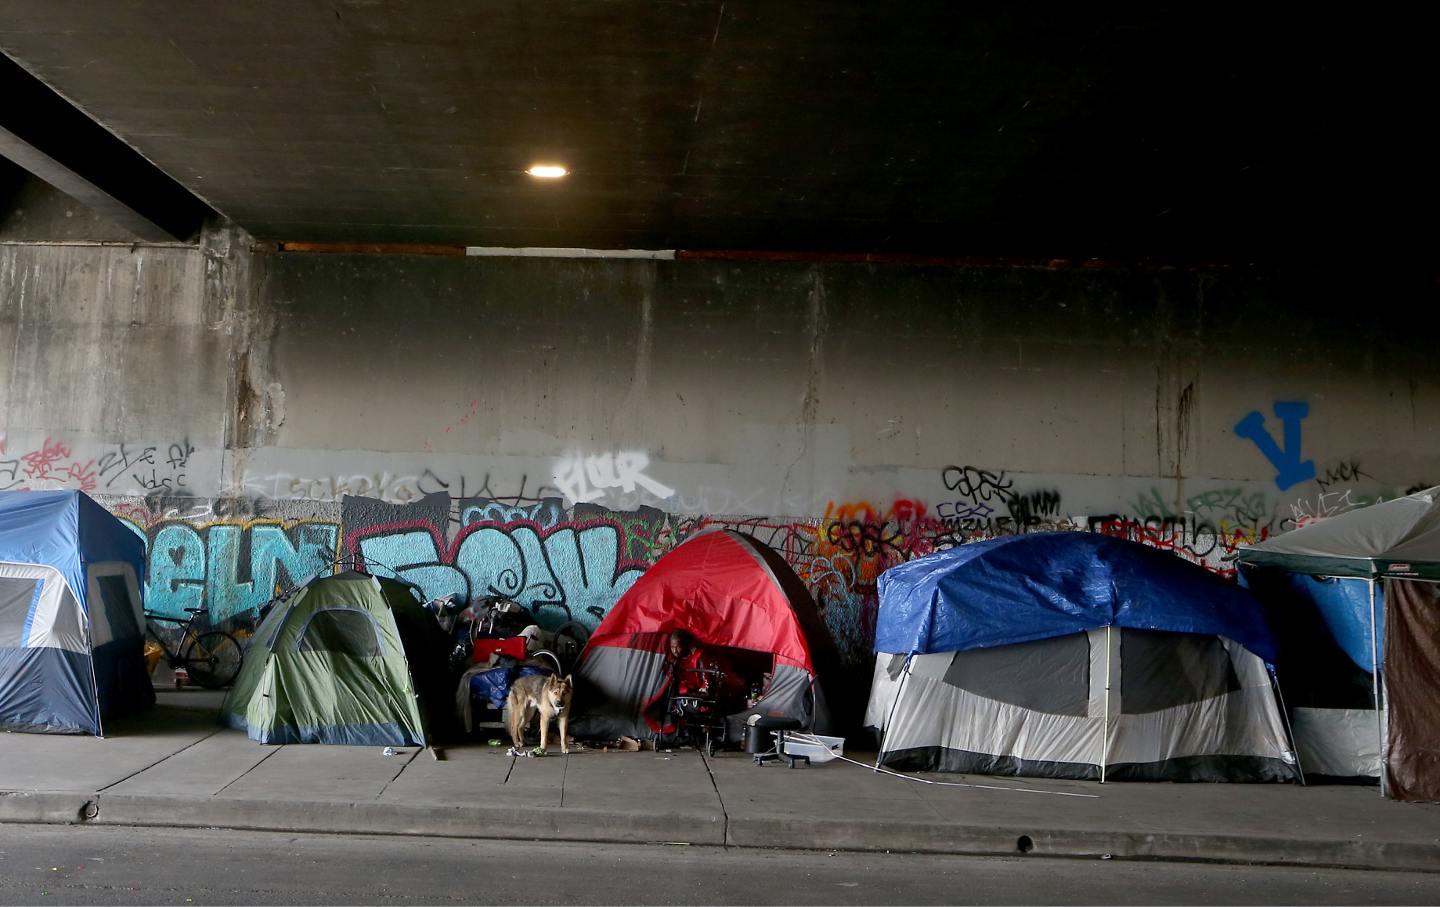 A tent city in Culver City, California.